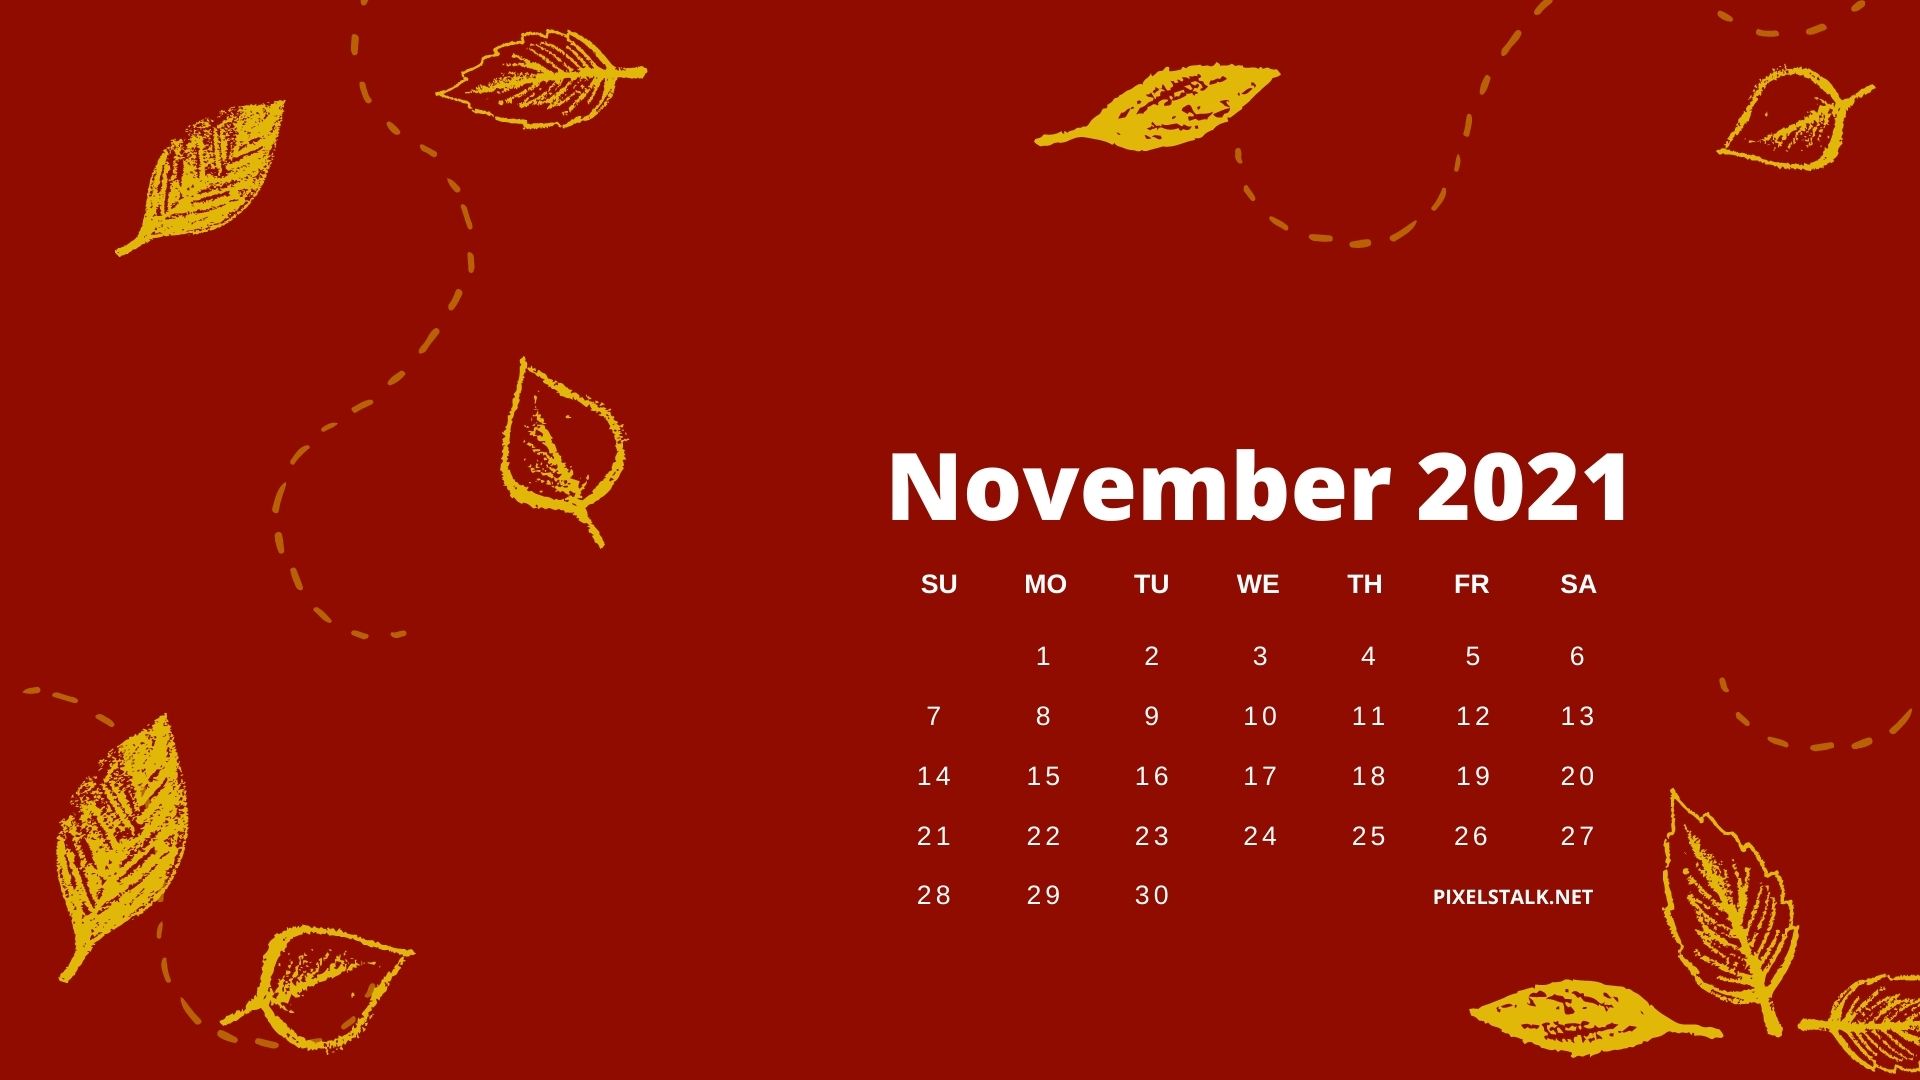 November 2021 Calendar Wallpapers - PixelsTalk.Net